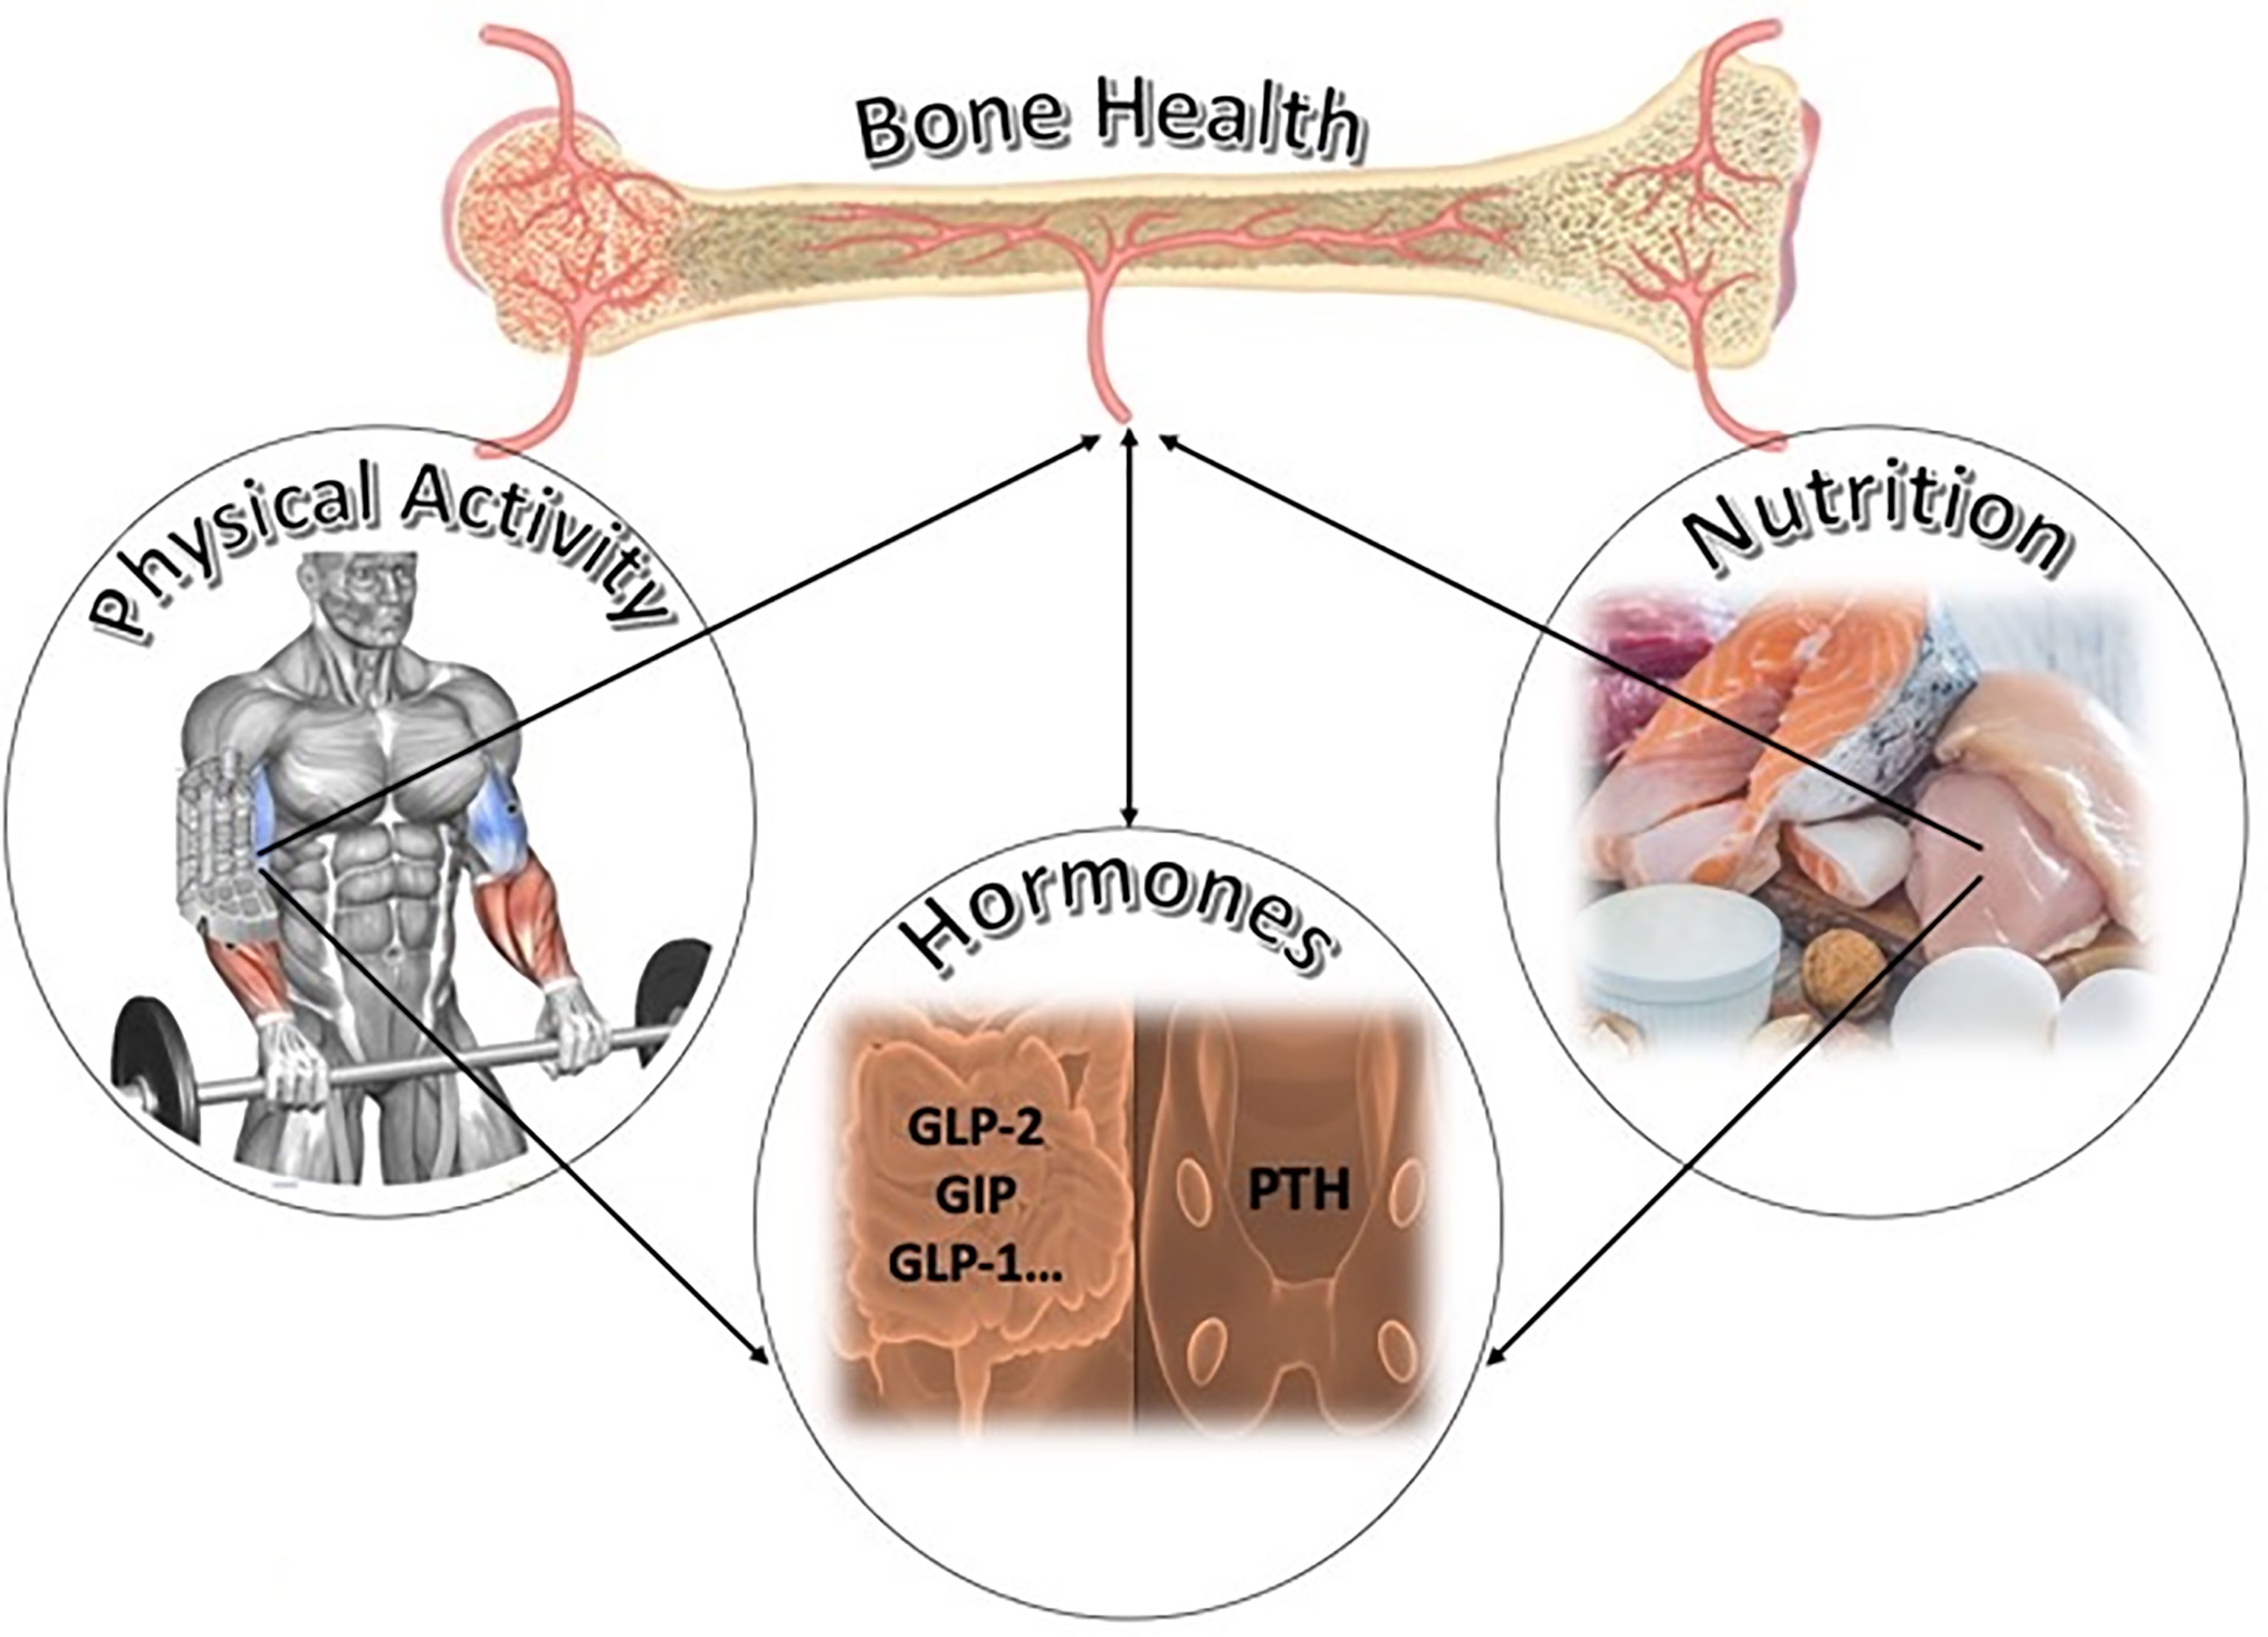 Promoting bone health through nutrition